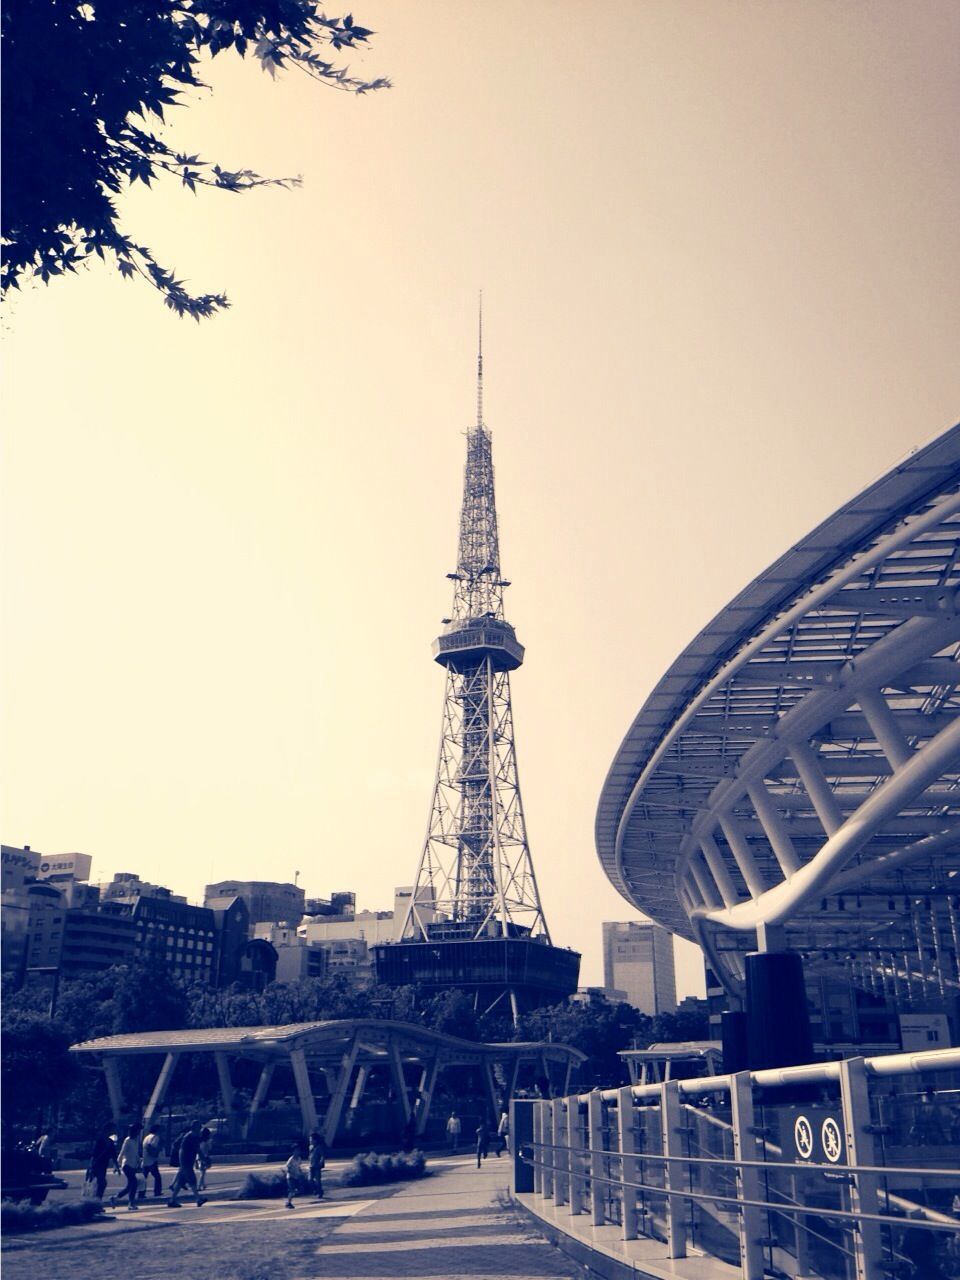 Nagoya tv tower